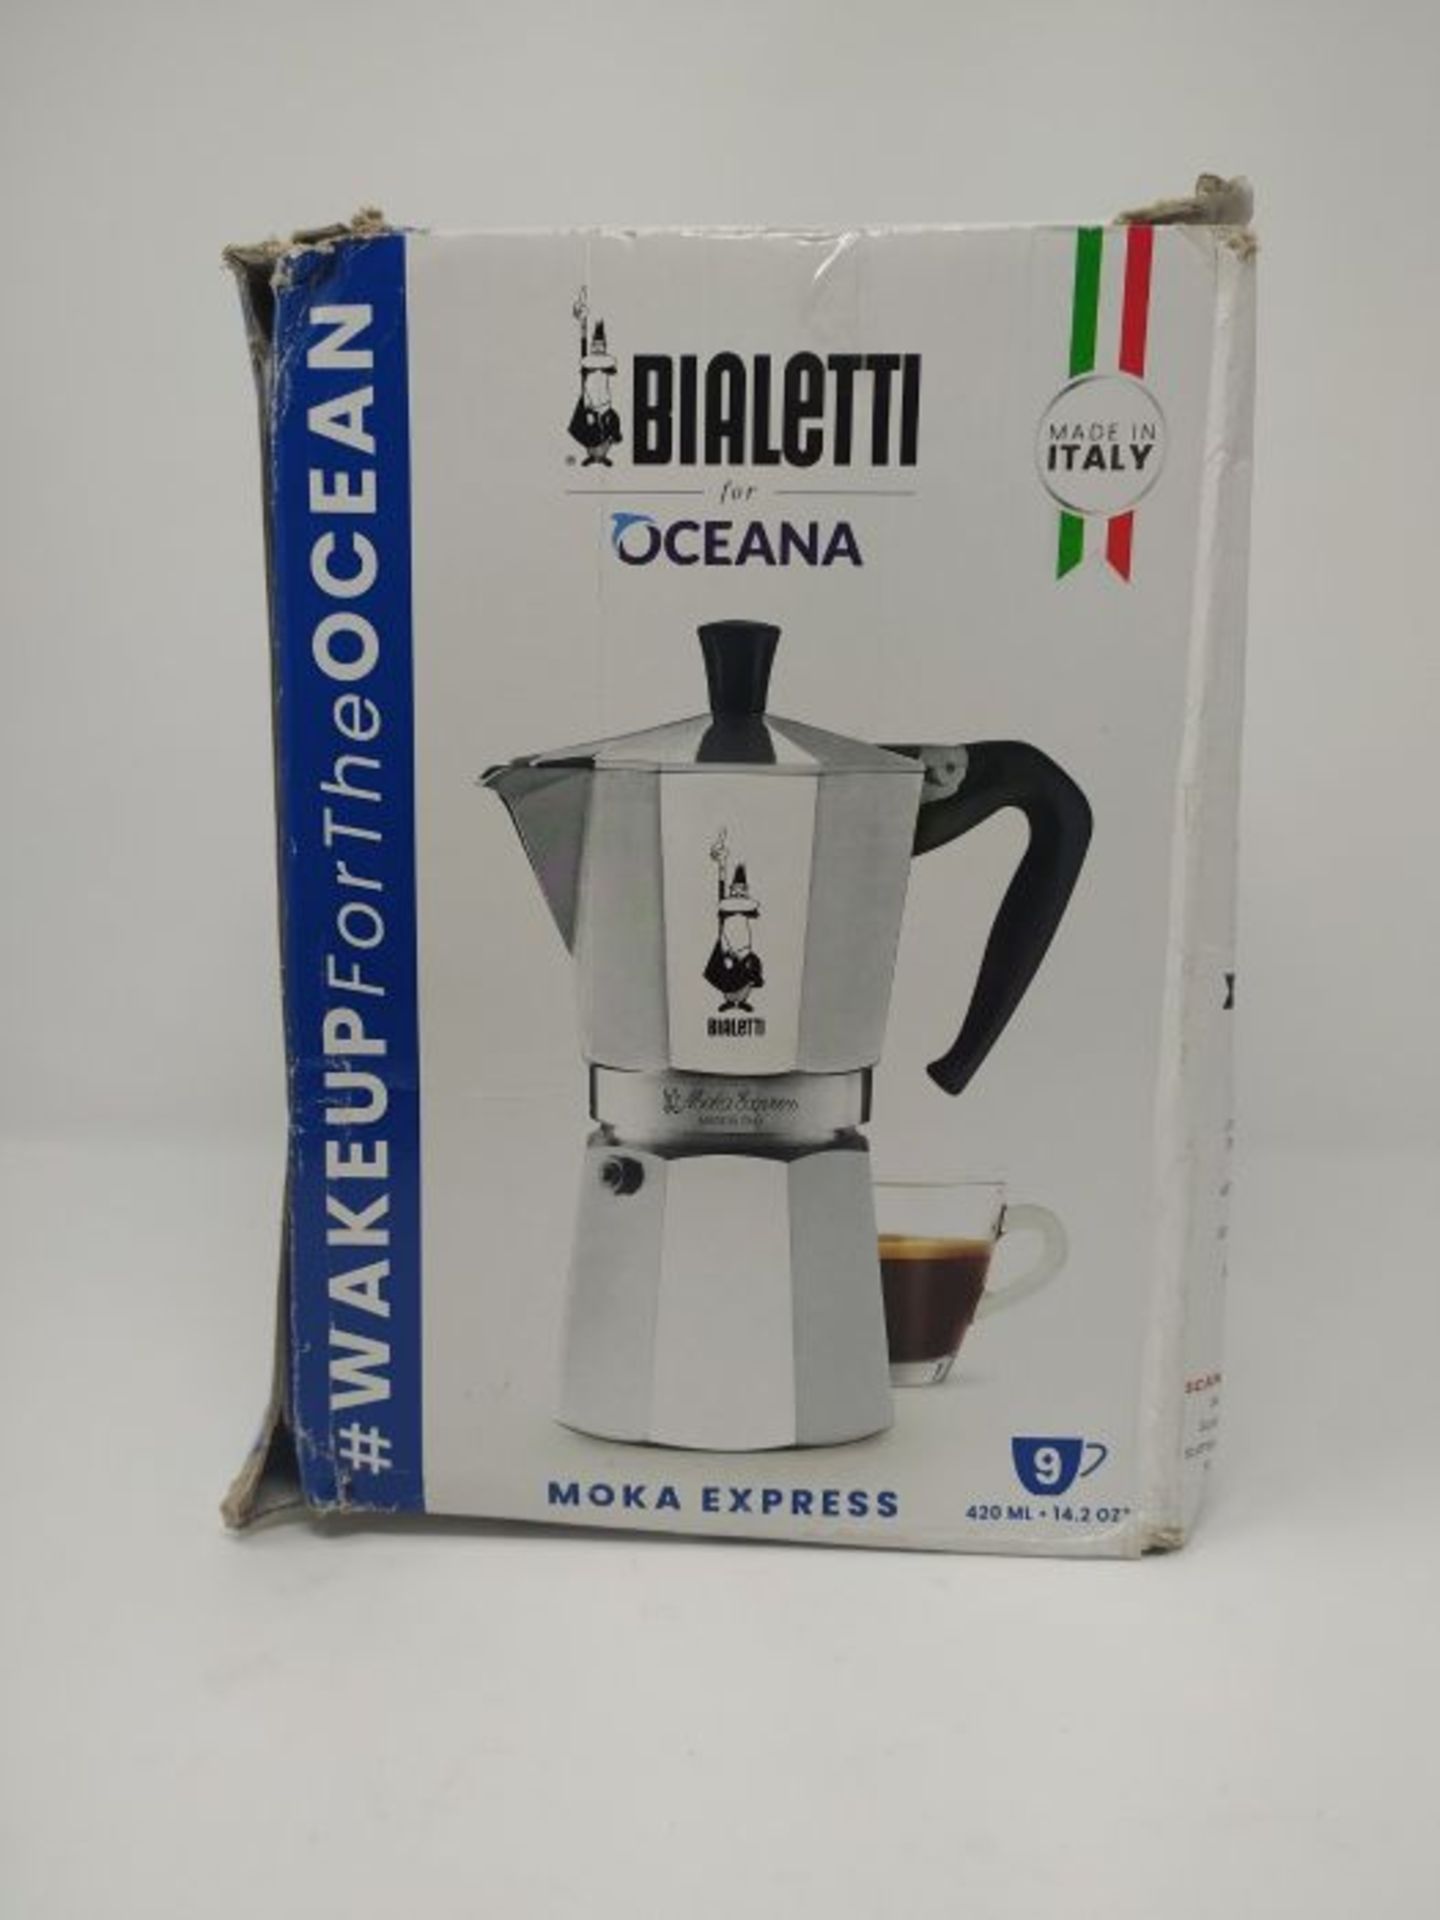 Bialetti Moka Express Aluminium Stovetop Coffee Maker (9 Cup) - Image 2 of 3